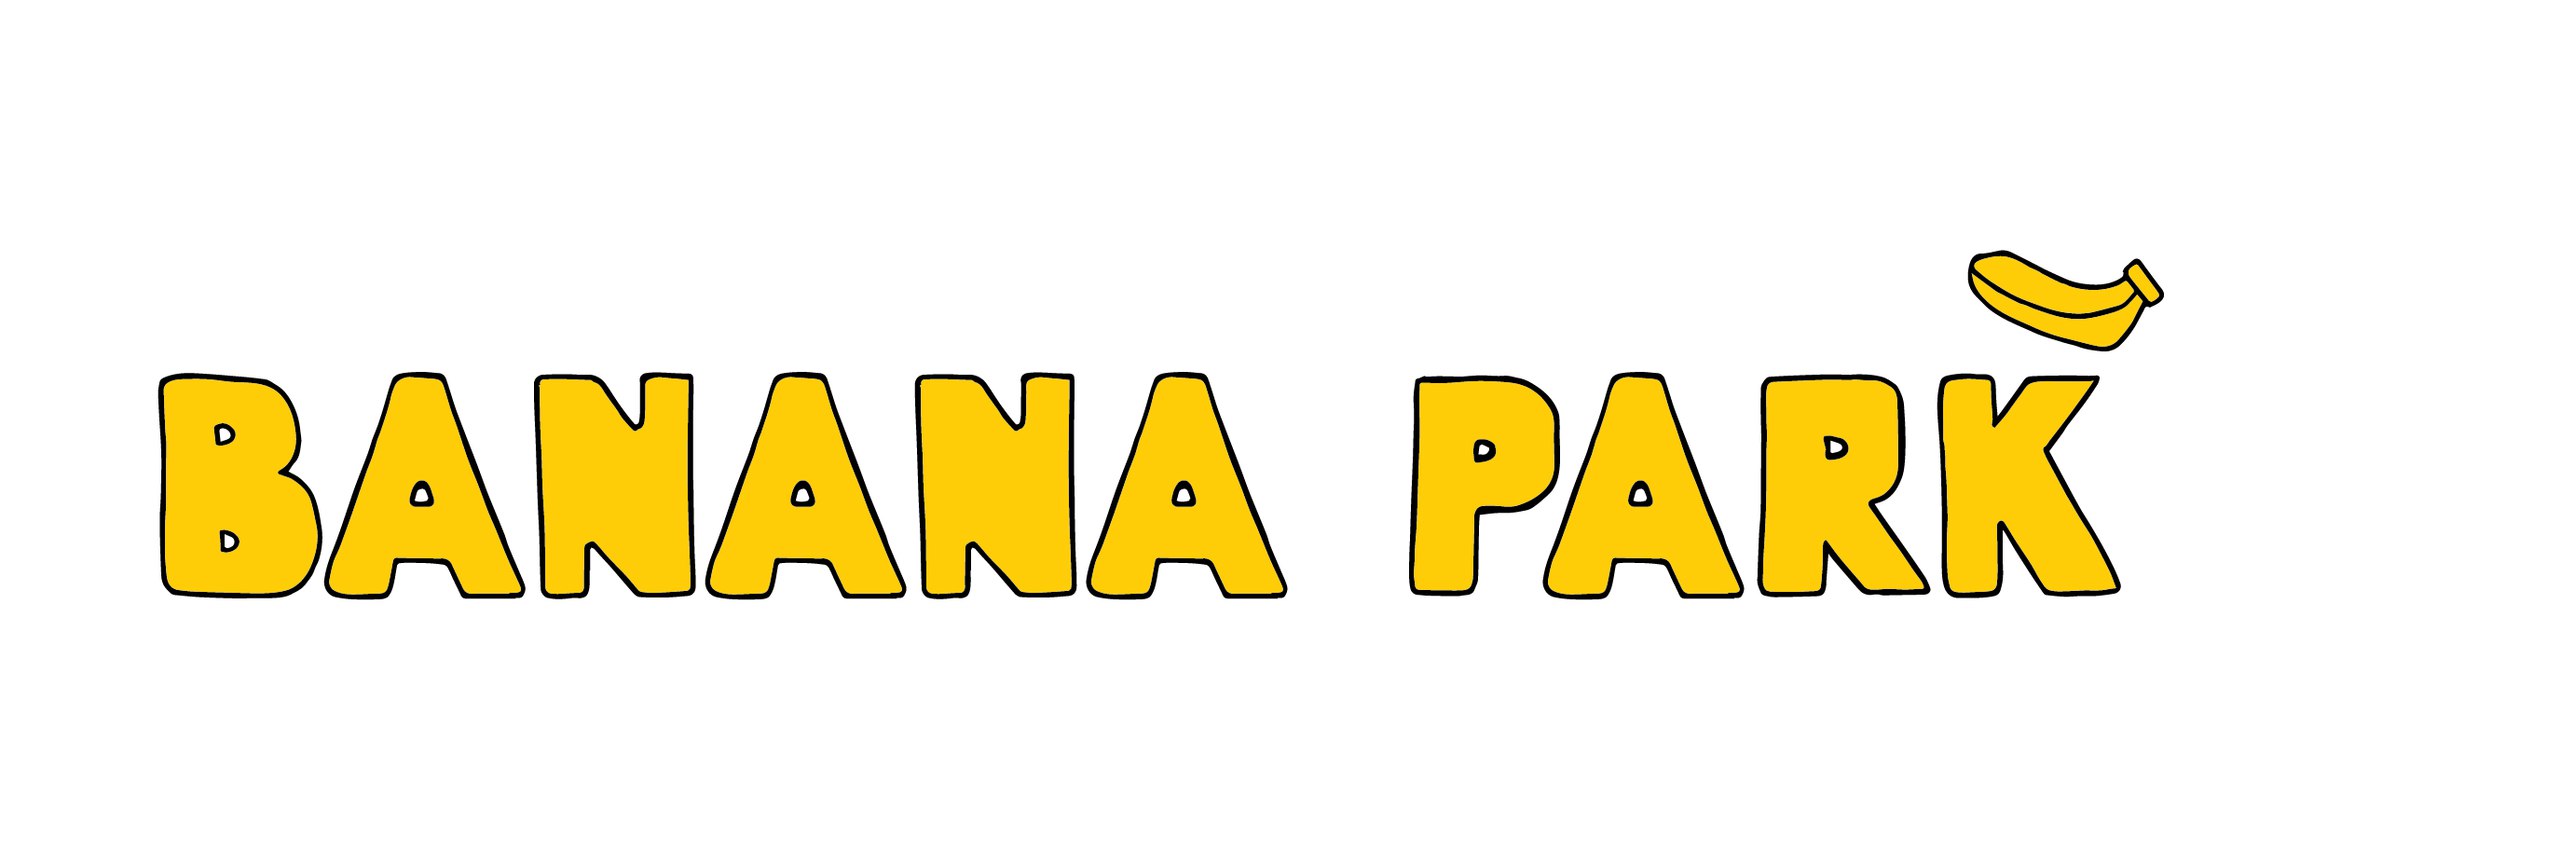 красноярск банана парк